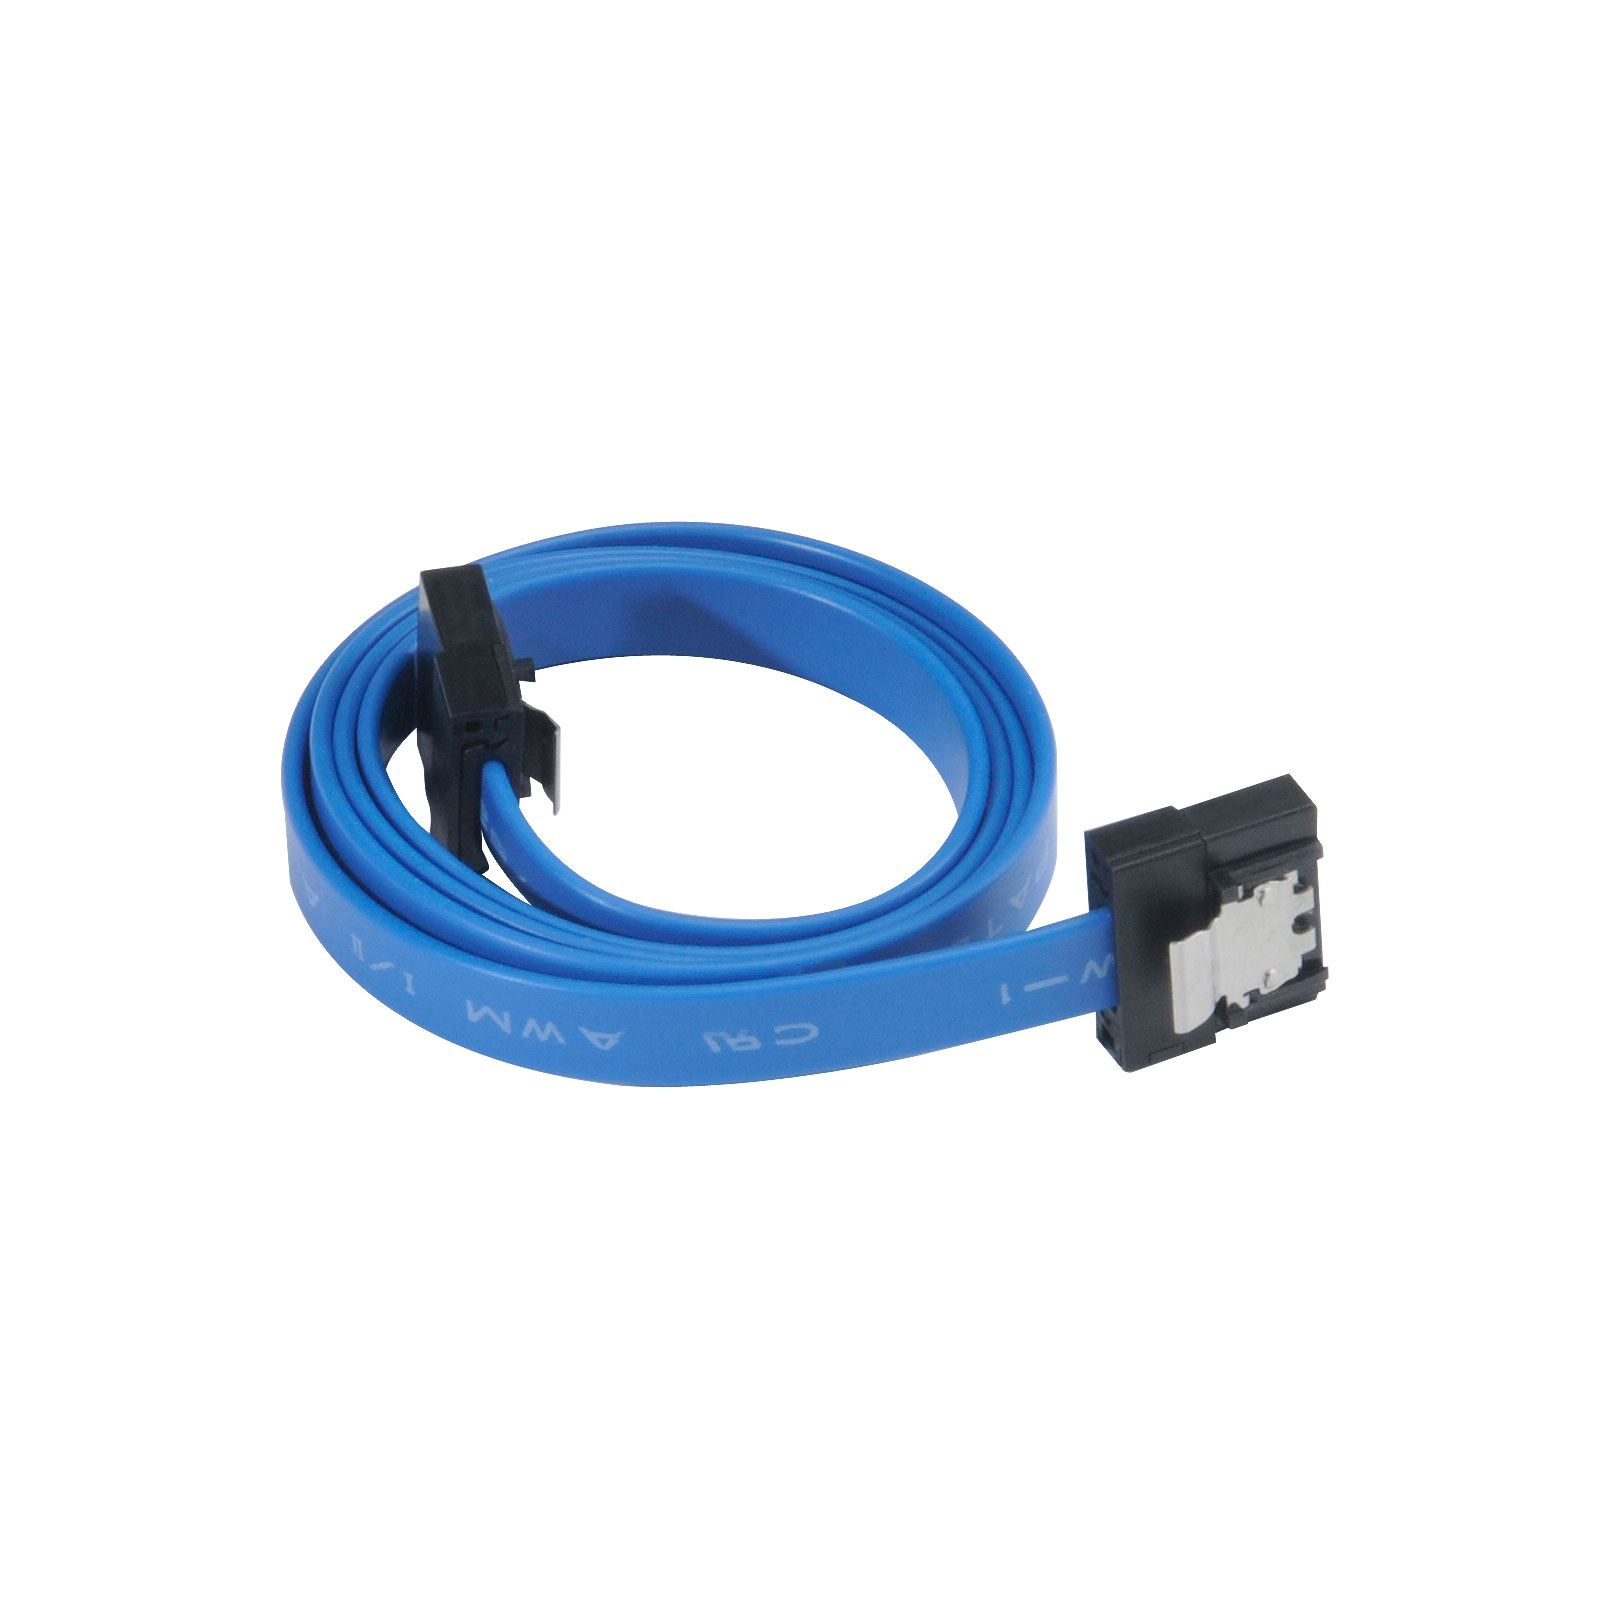 Akasa super slim sata rev 3.0 data cable with securing latches - 50cm, blue, *SATAM